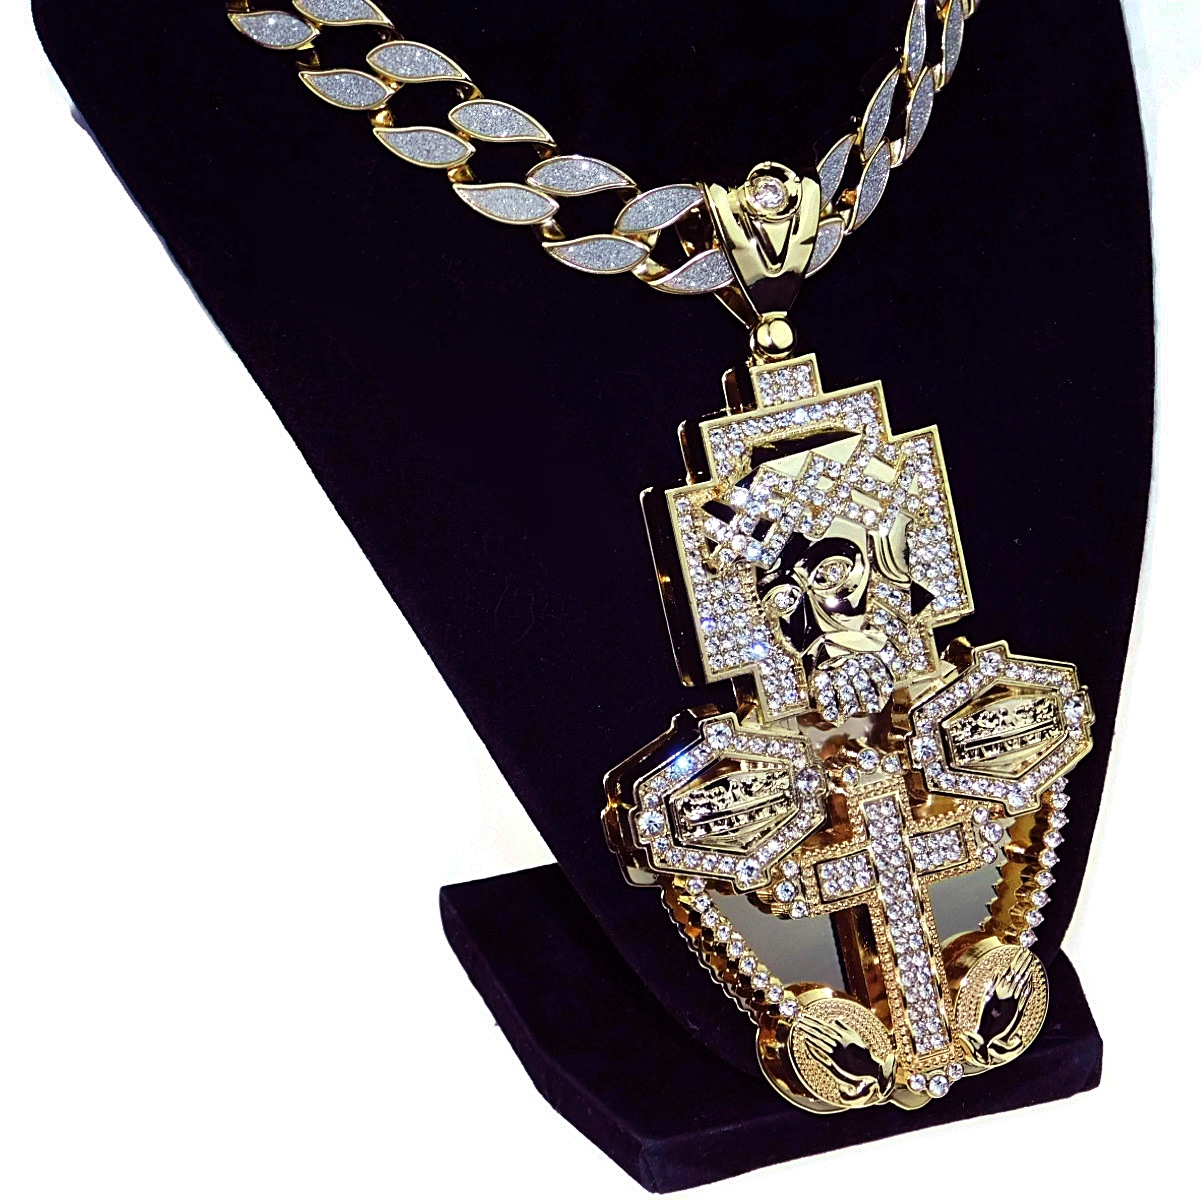 Huge Jesus Piece Chain Last Supper Cross 3D Combo Pendant Sand Blast Gold Finish 30" Inch Cuban Link Hip Hop Necklace - image 1 of 7